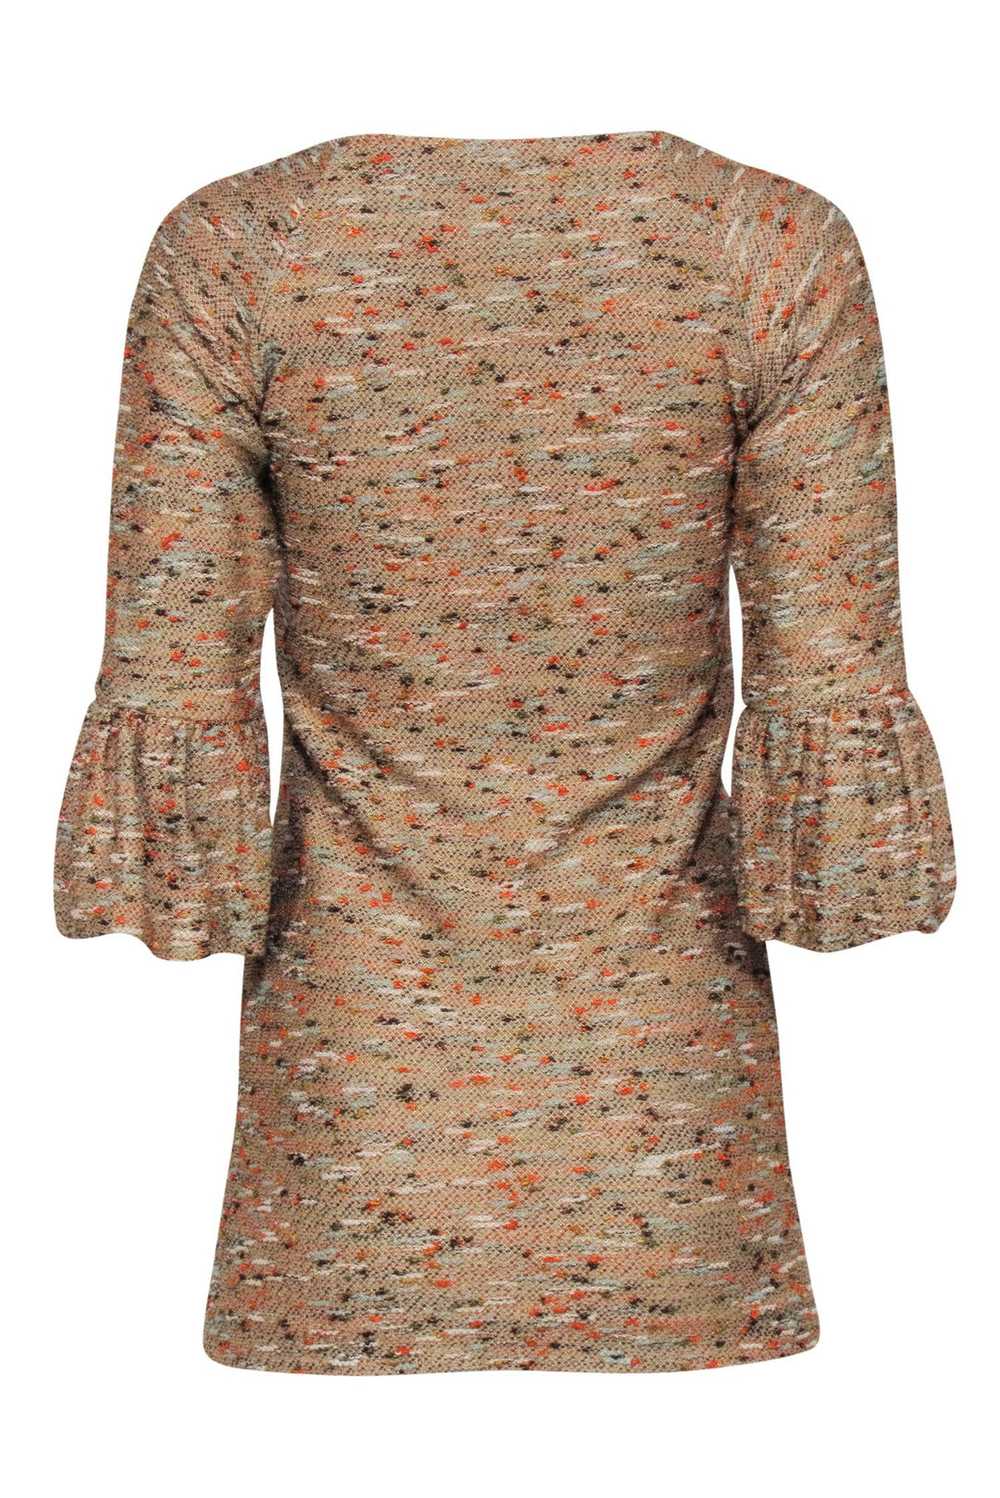 Diane von Furstenberg - Tan & Multi Color Tweed B… - image 3